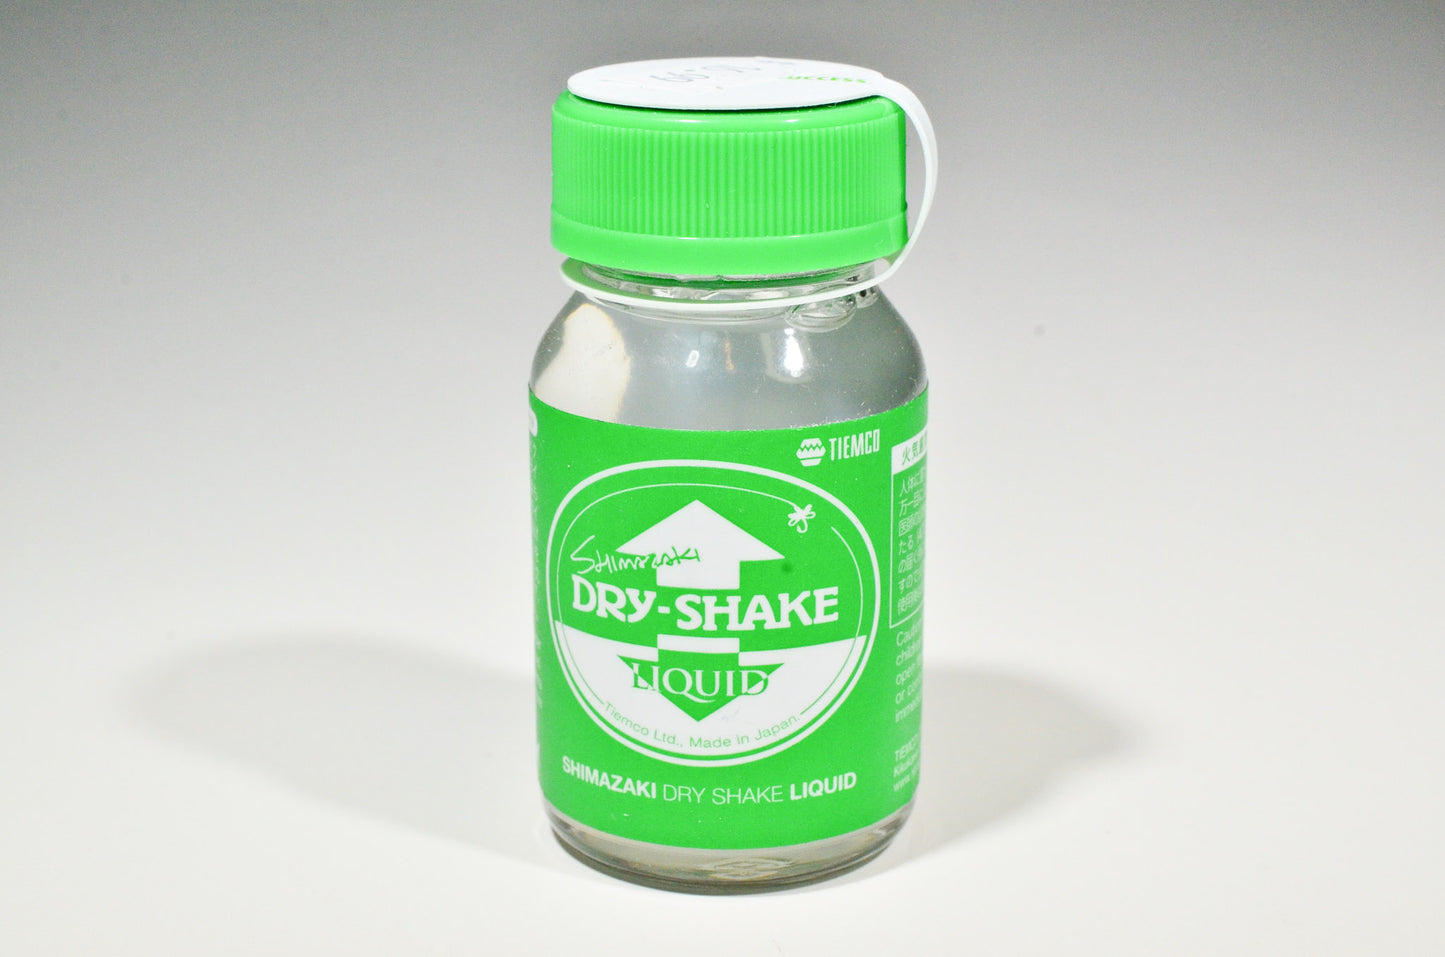 Shimizaki Dry Shake Liquid